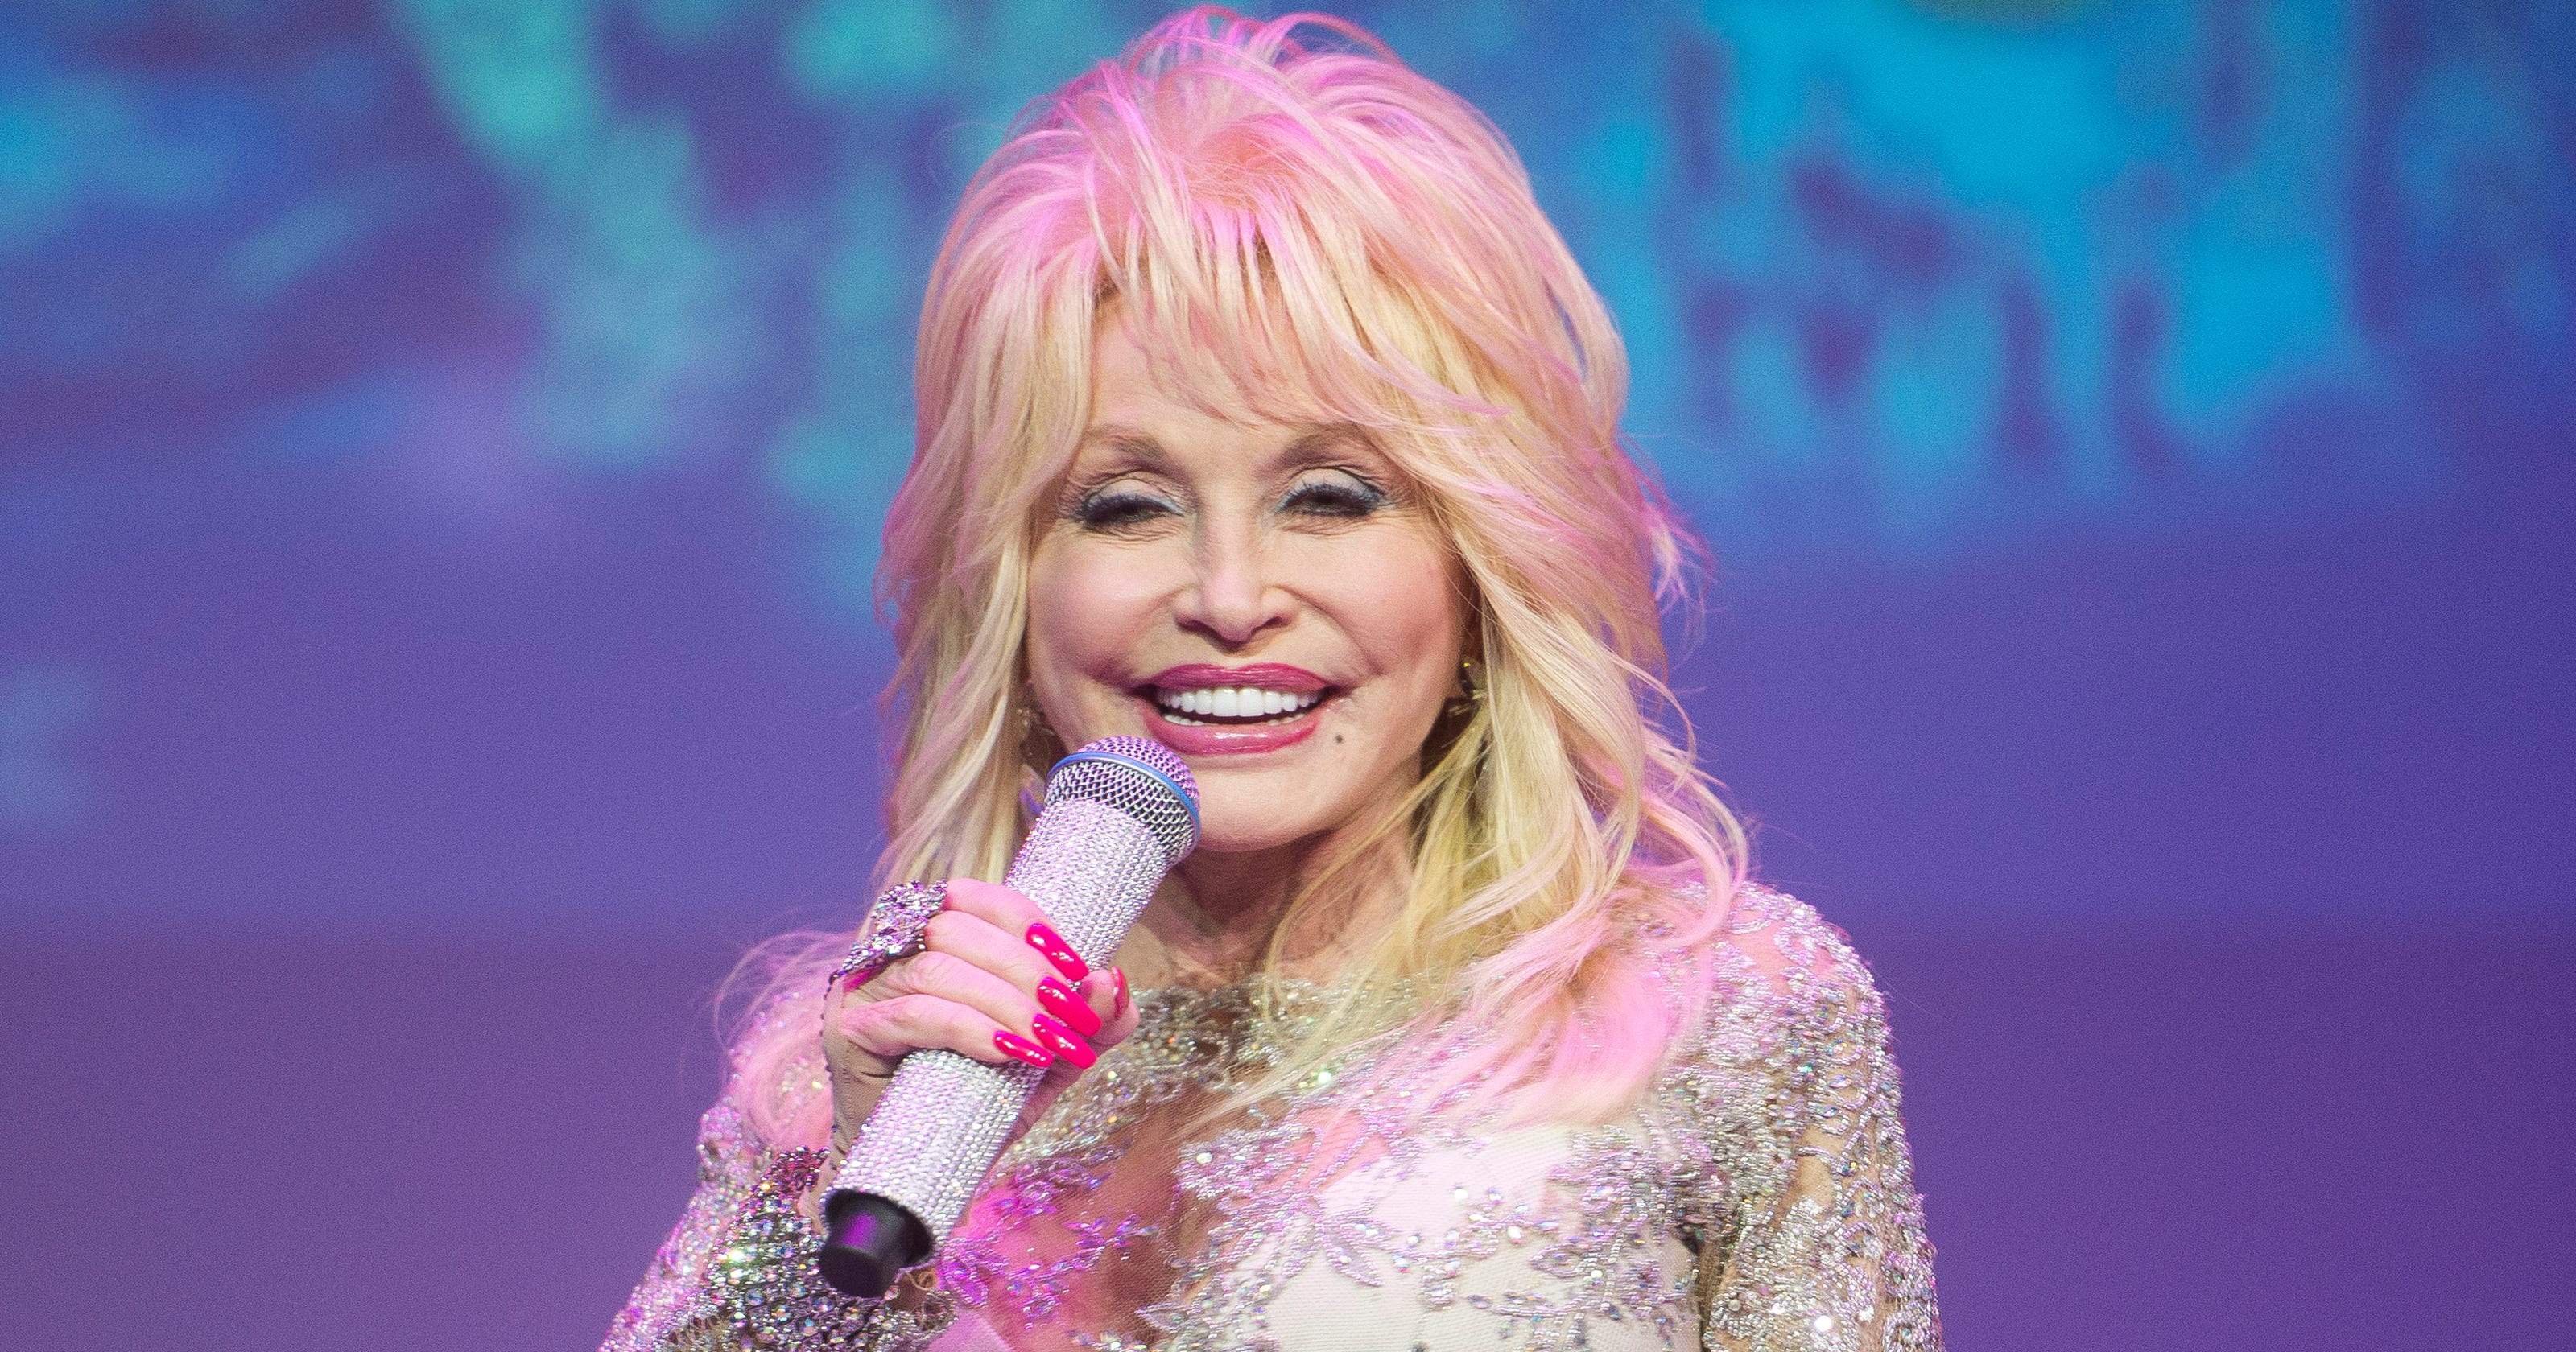 Dolly Parton cracks up fans with 'Jolene' distracted boyfriend meme3200 x 1680